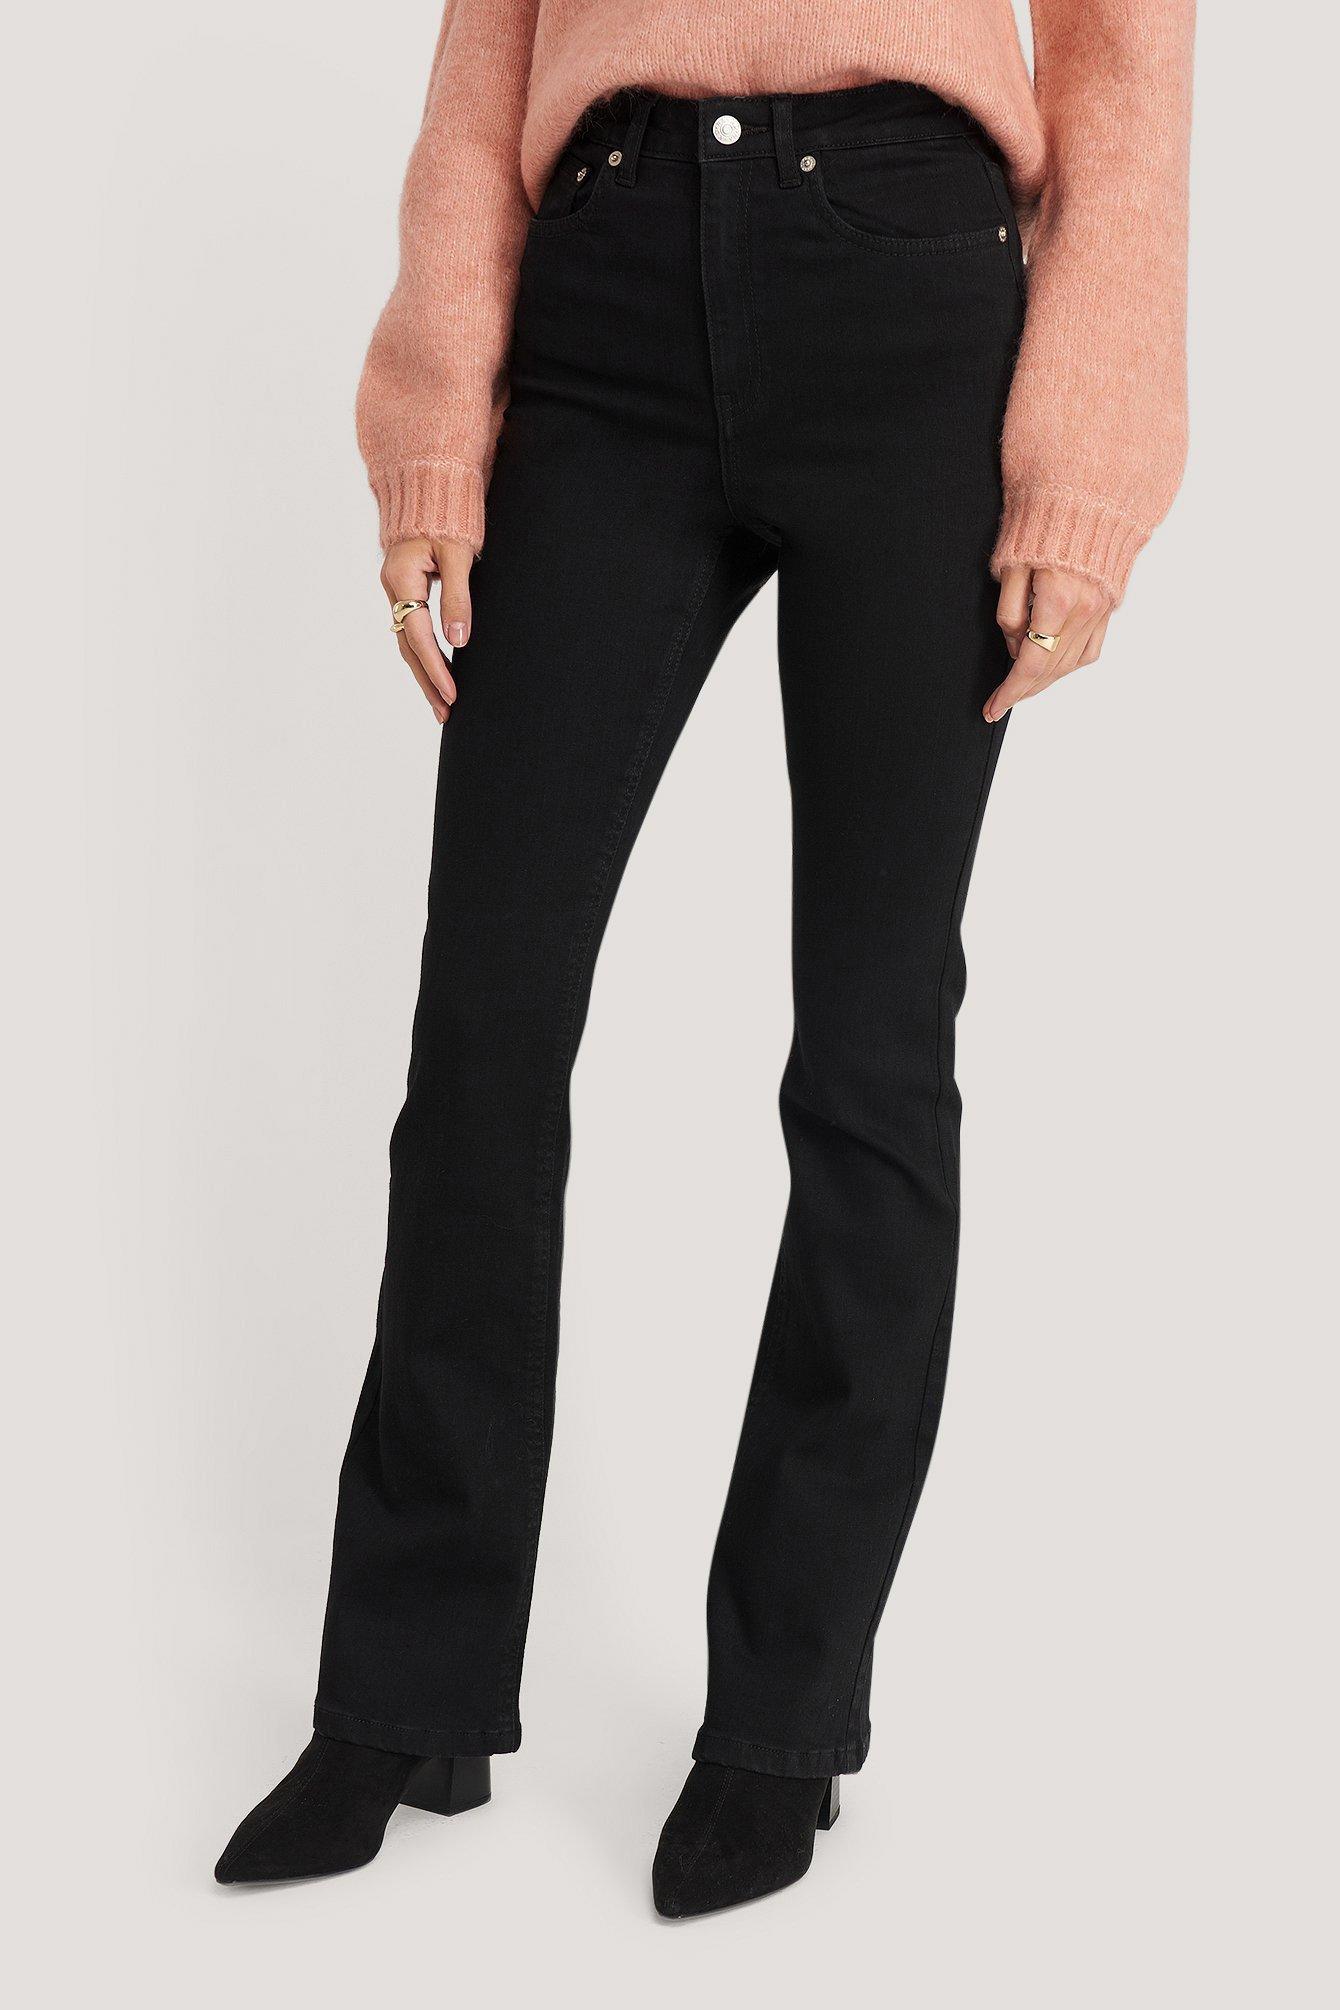 black skinny bootcut jeans